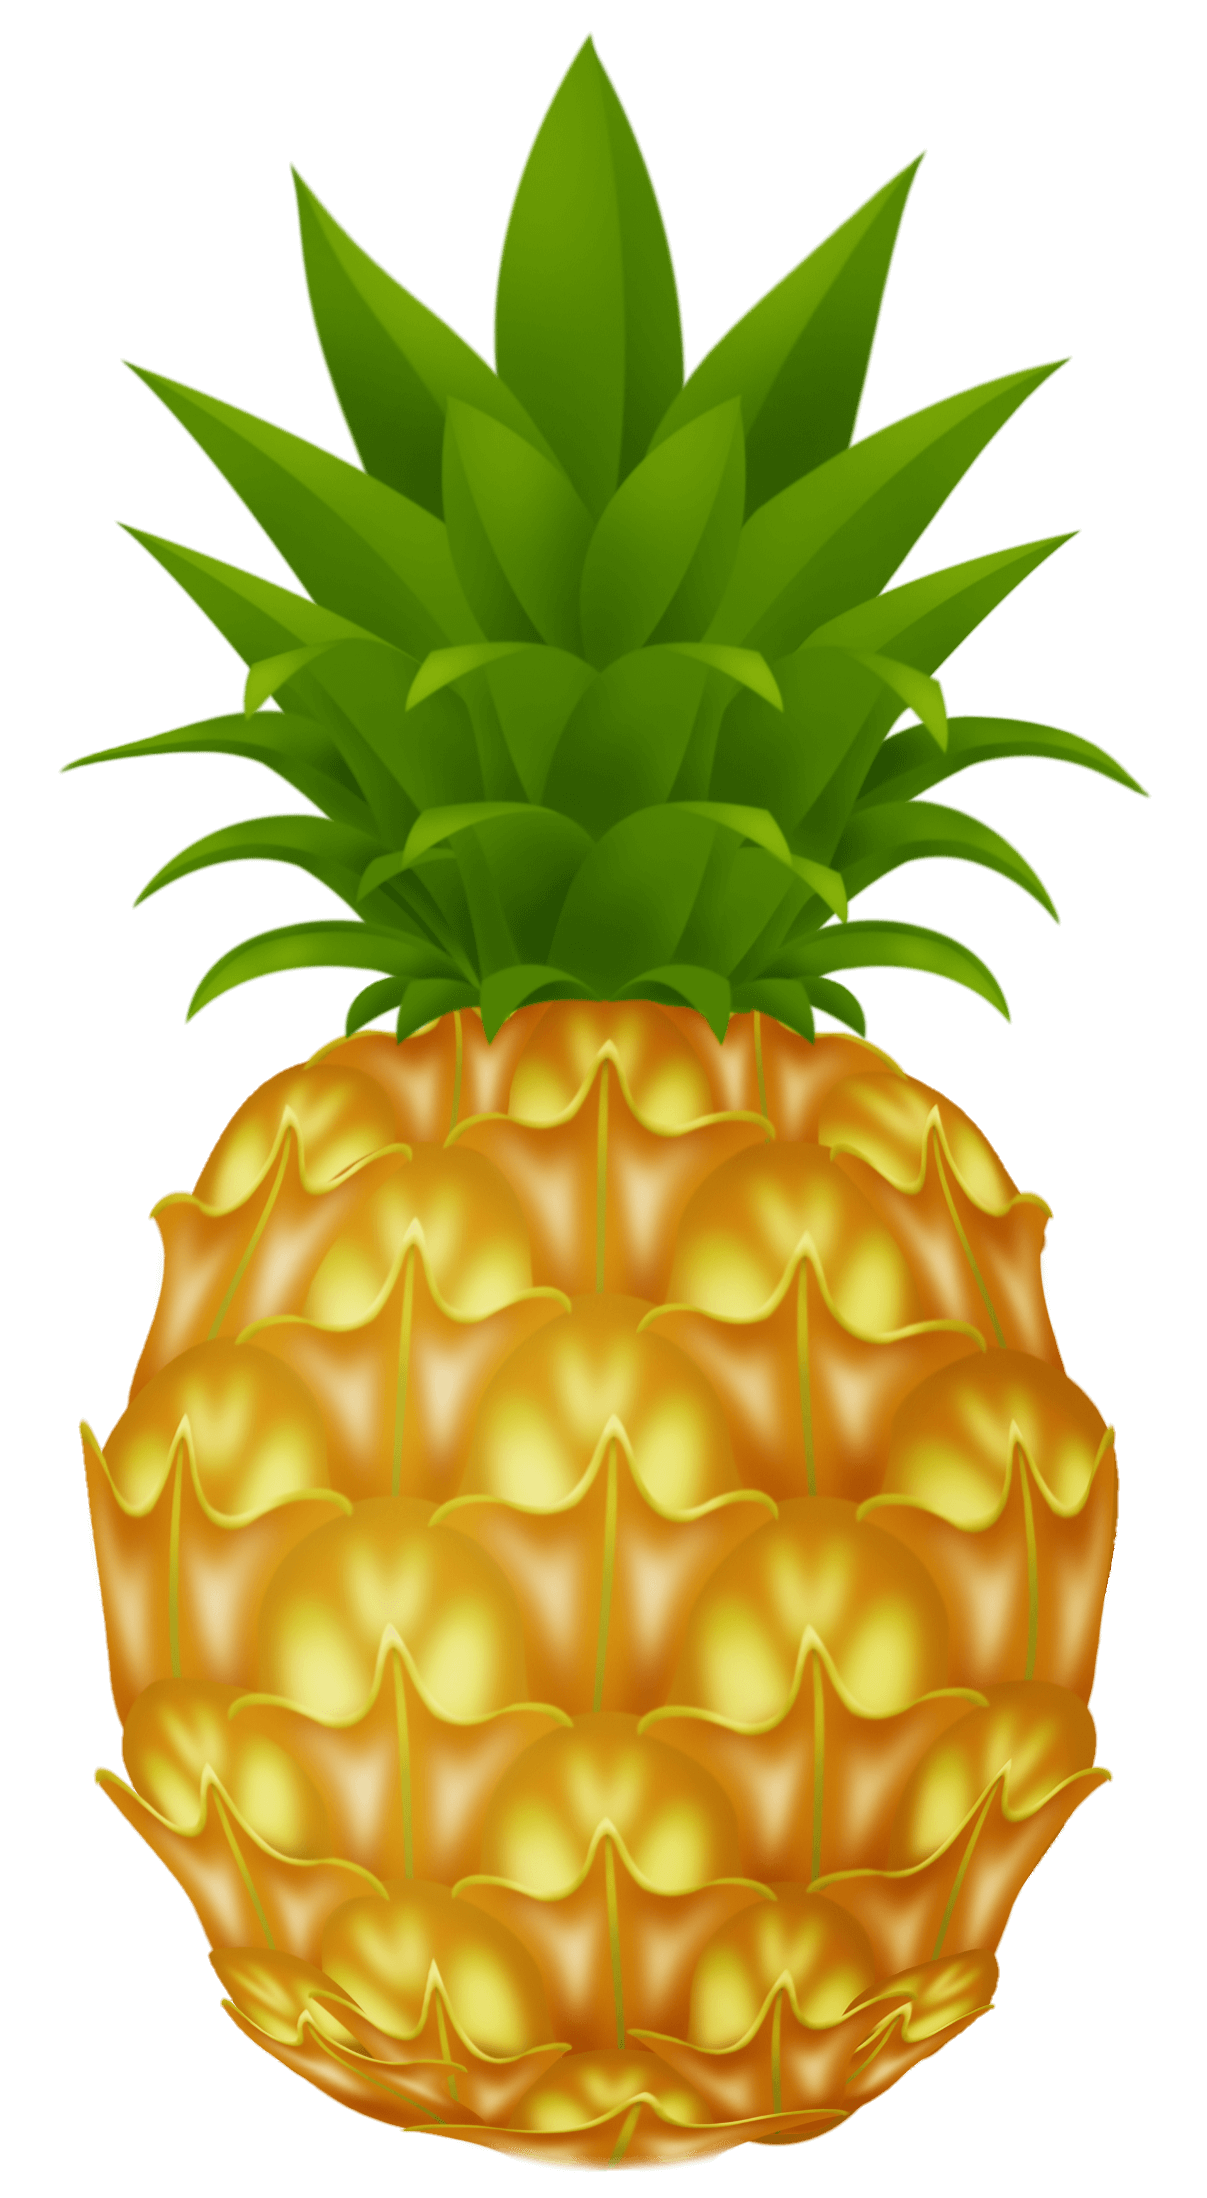 pineapple-39